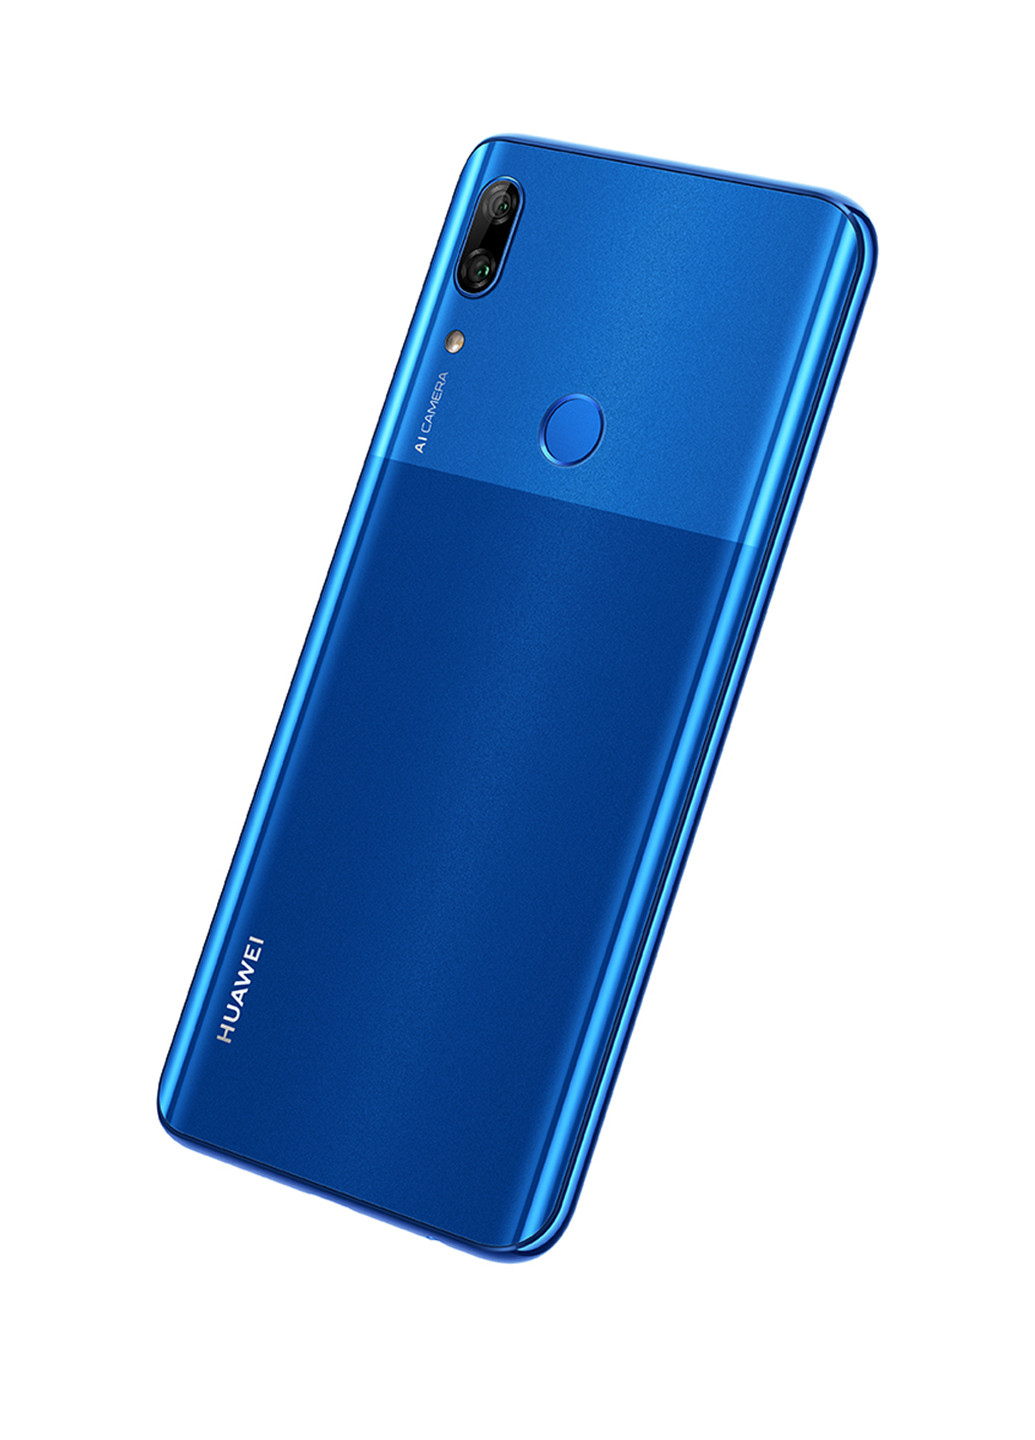 Смартфон P SMART Z 4 / 64GB Blue (STK-LX1) Huawei p smart z 4/64gb blue (stk-lx1) (163174107)